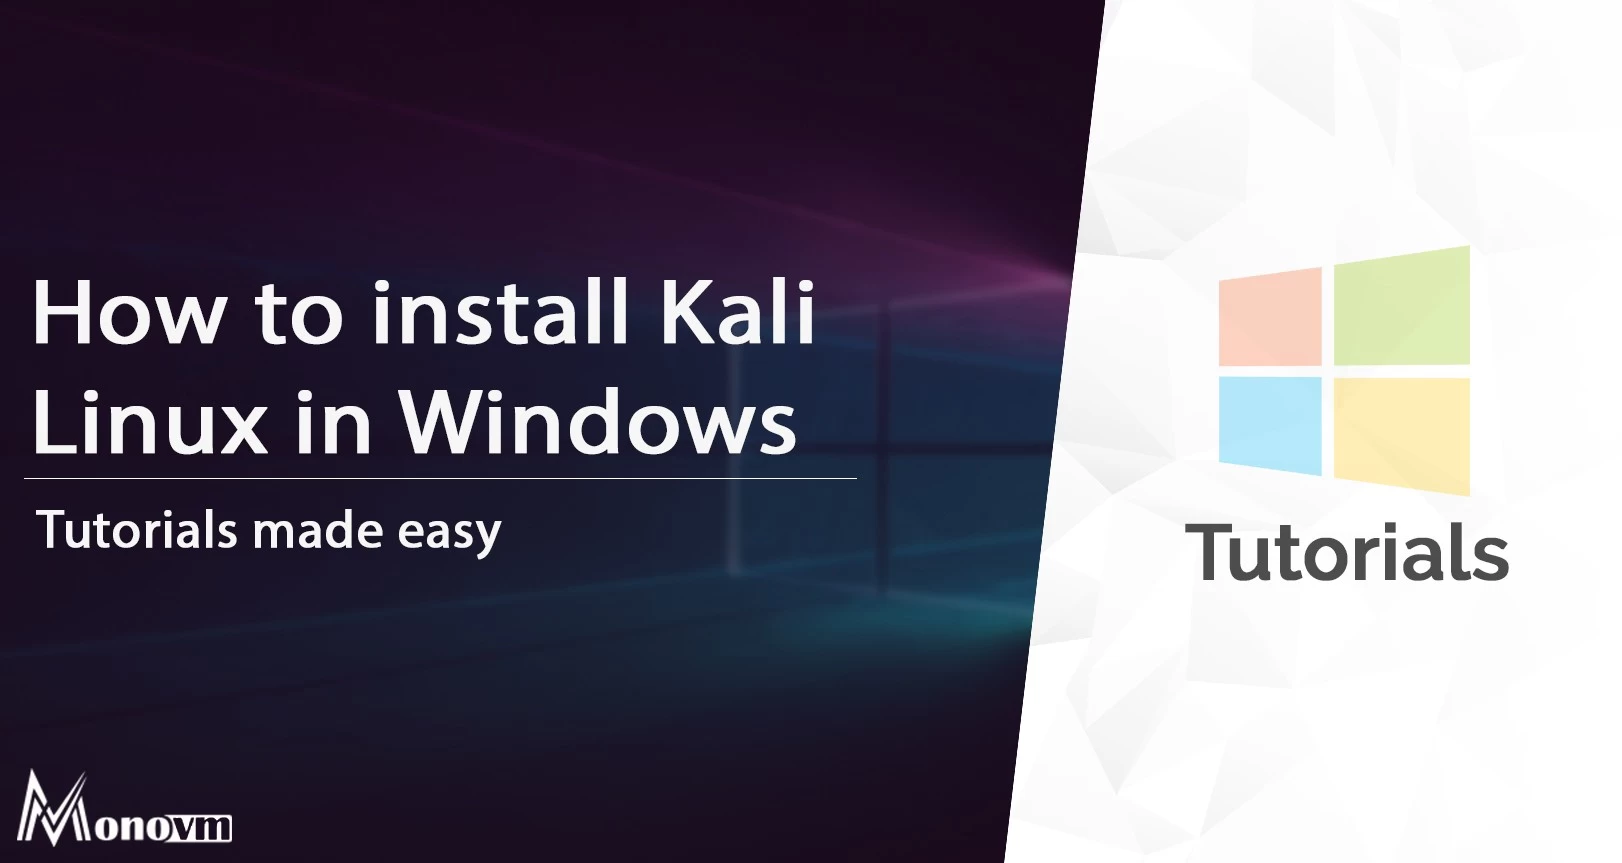 Installing Kali Linux in Windows through Microsoft Store